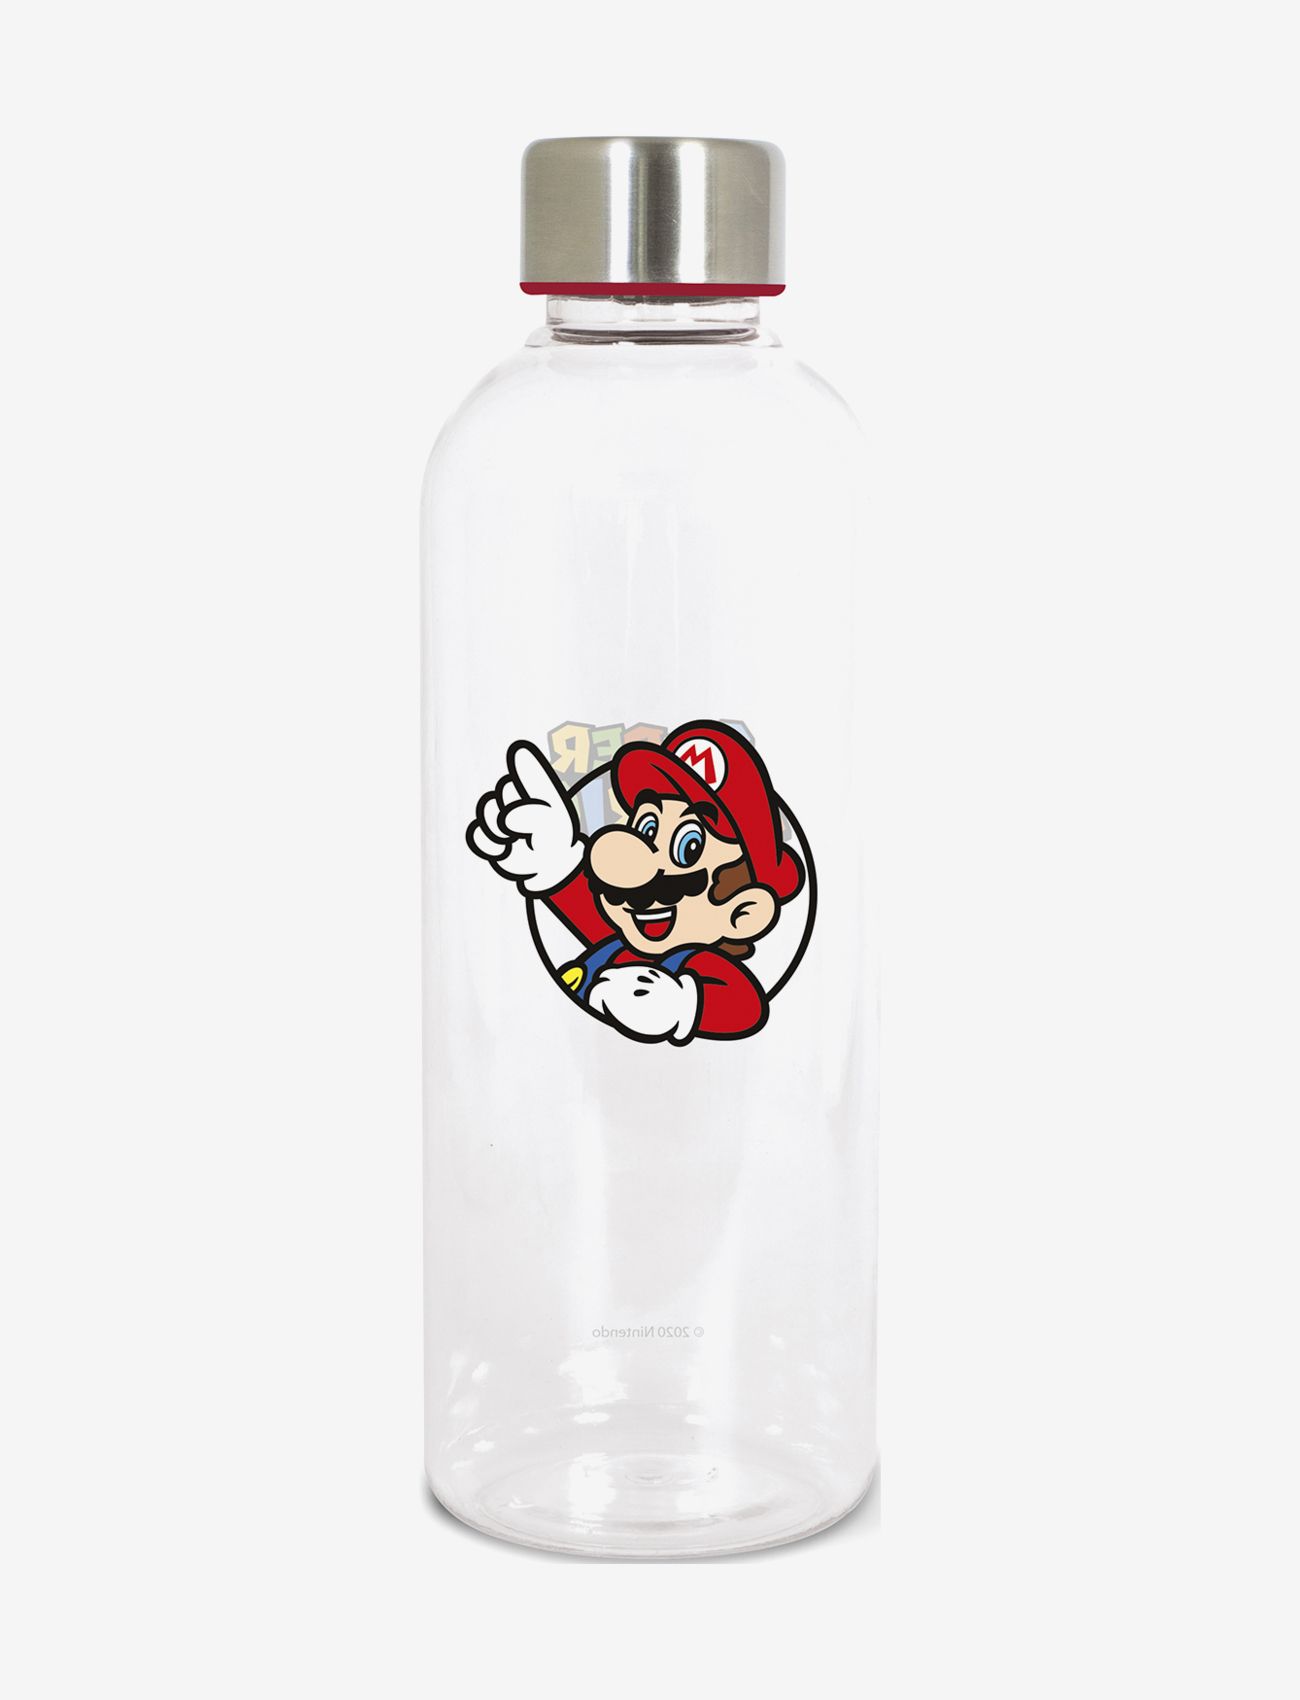 Super Mario Plastic Drinks Bottle Official Merchandise